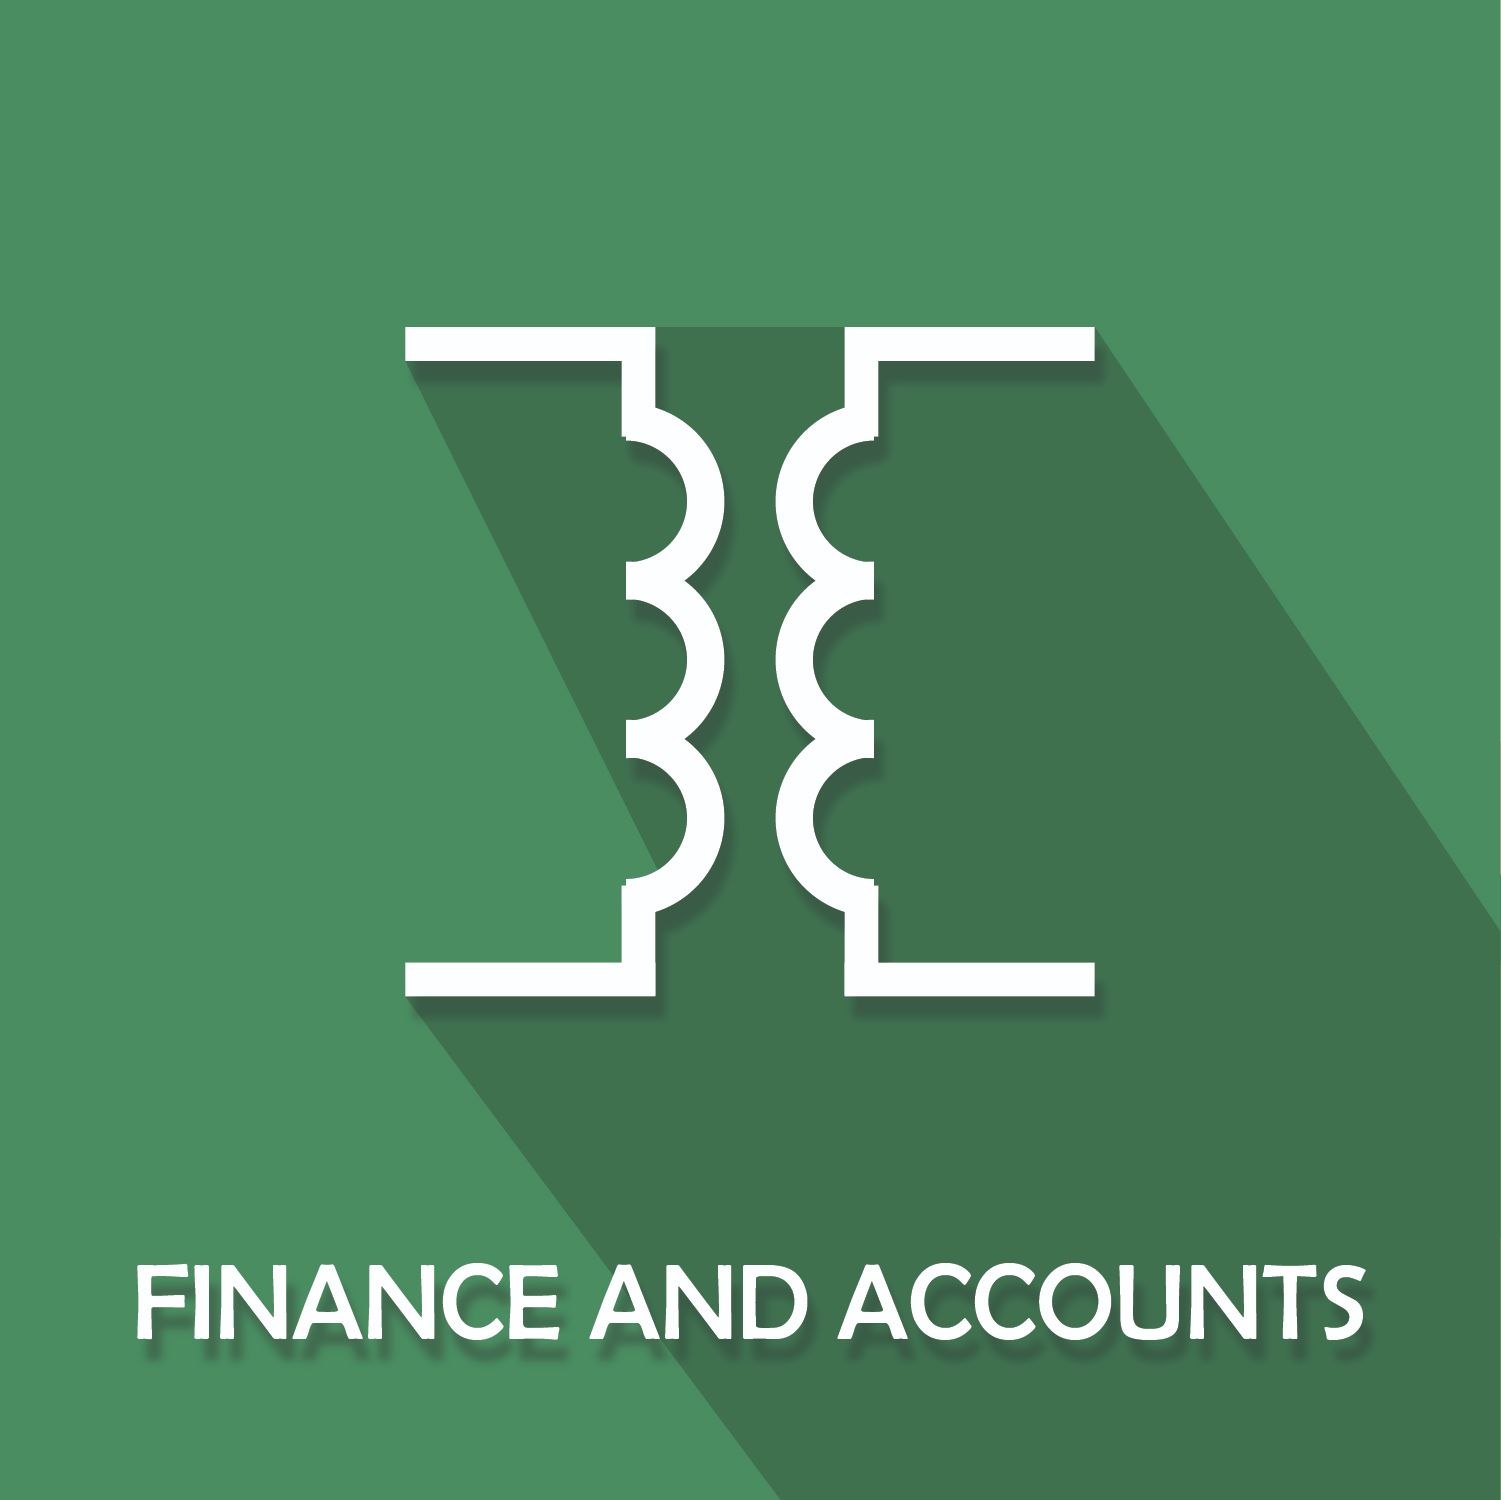 Finance and Accounts
